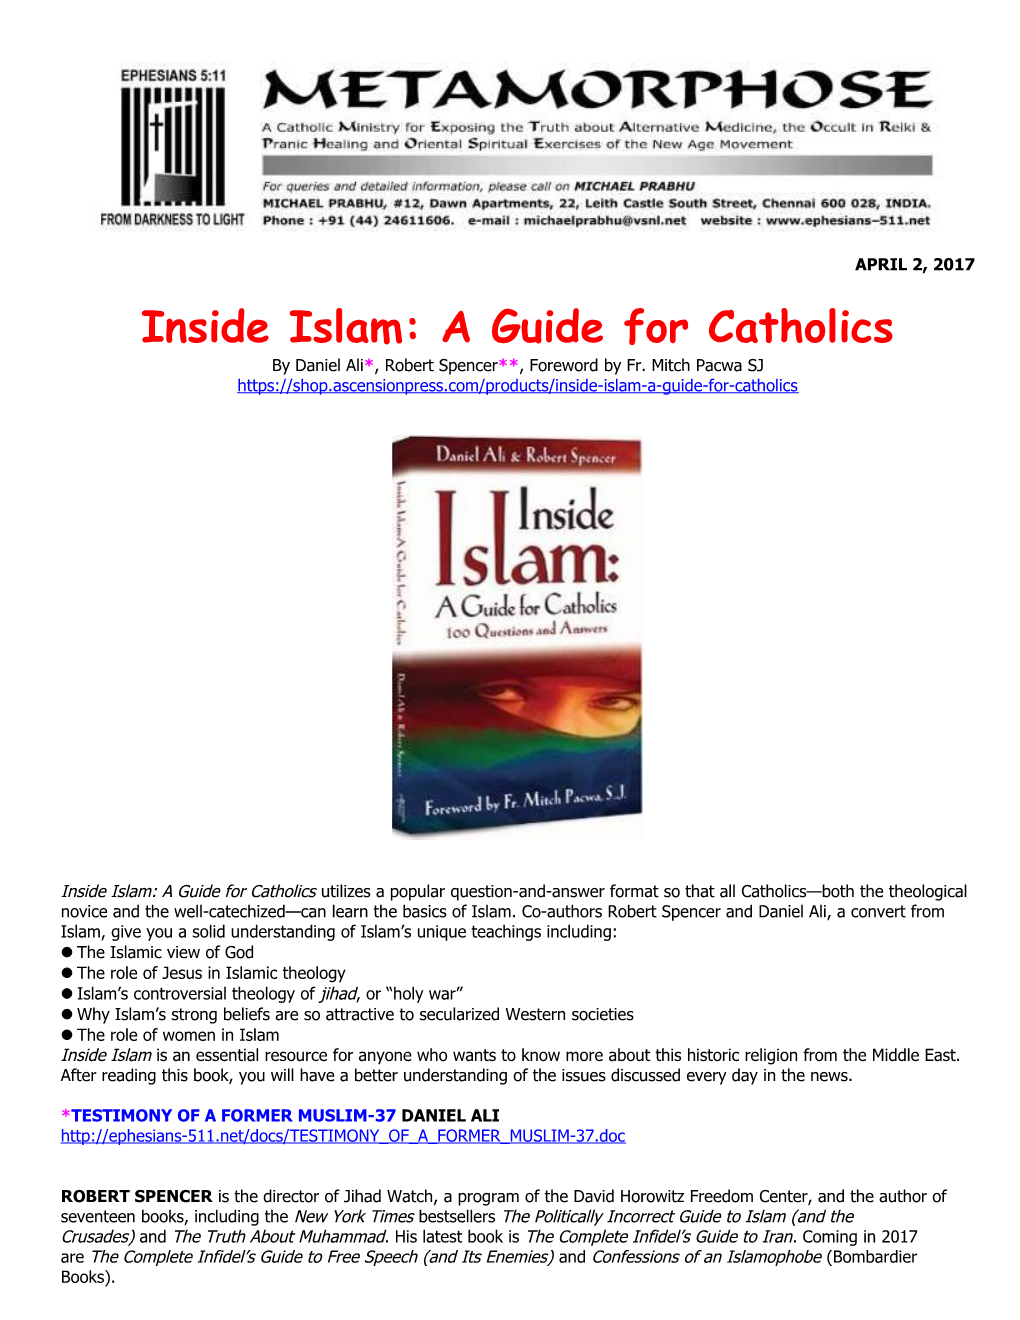 Inside Islam: a Guide for Catholics